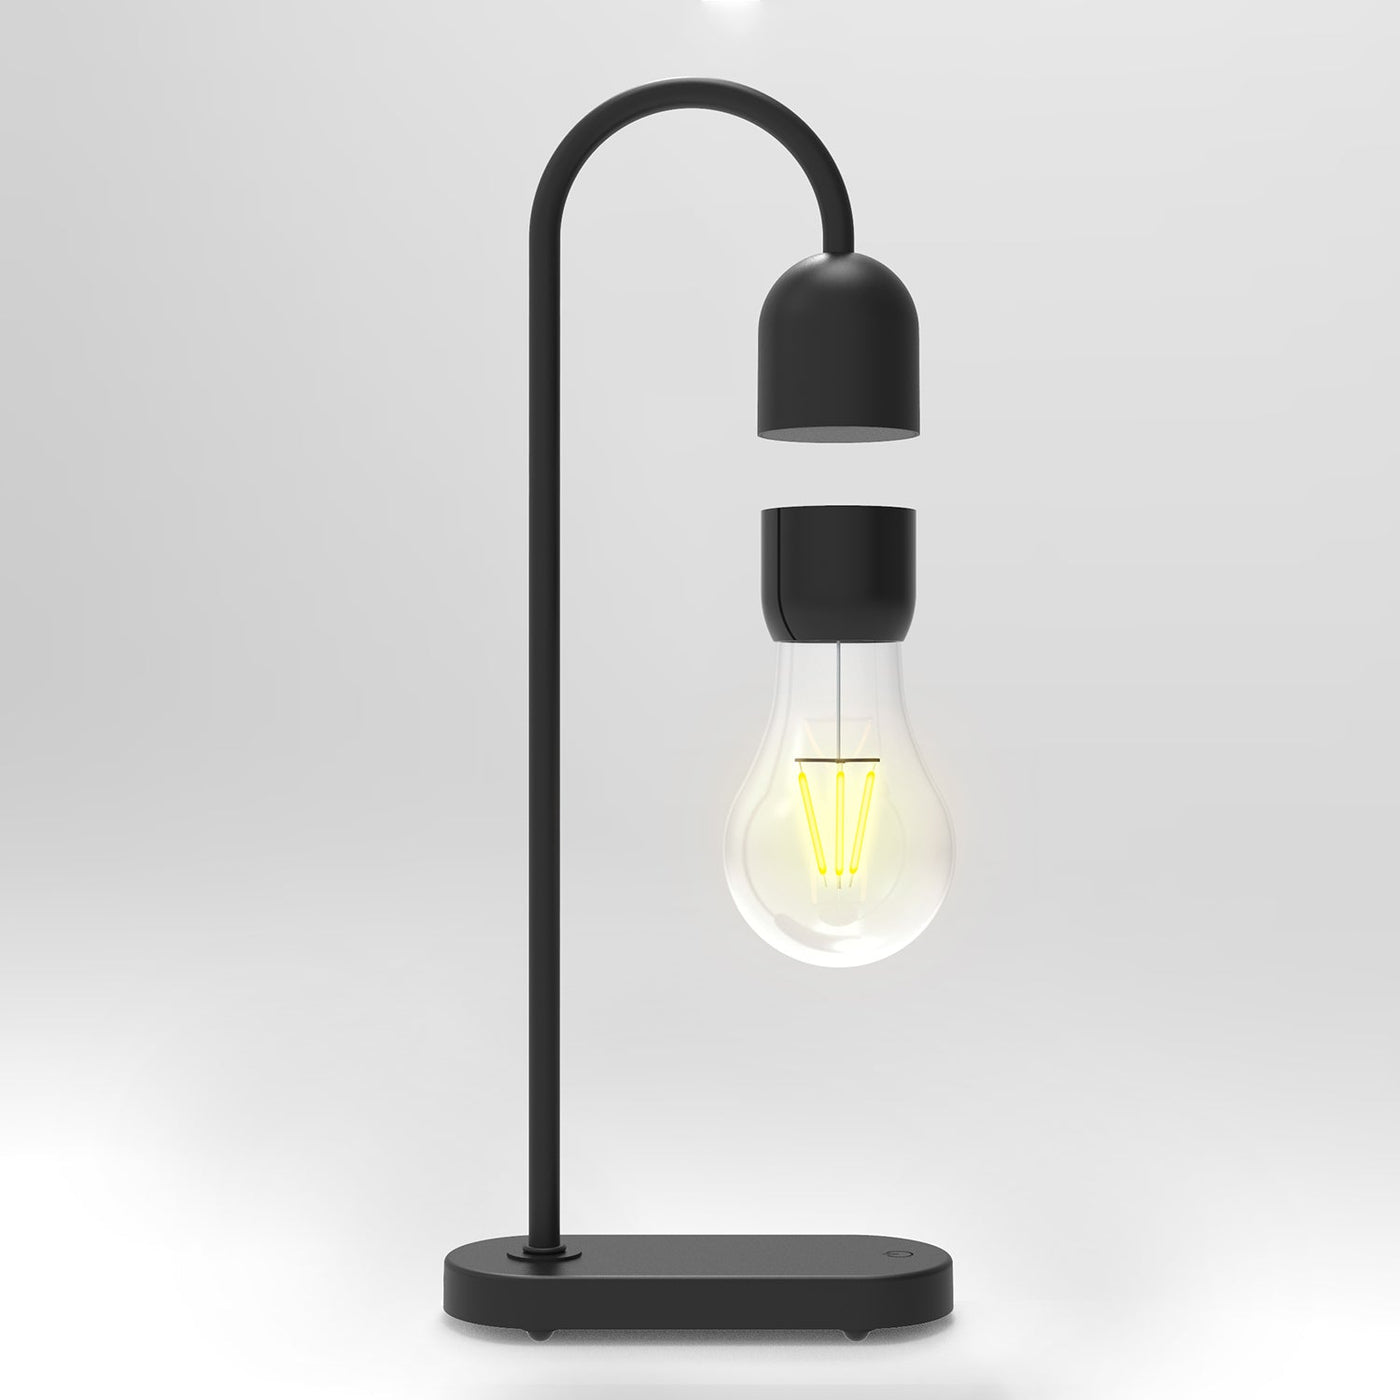 LANGTU Table Desk Smart Lamp with Magnetic Levitating Floating Wireless LED Light Bulb Black